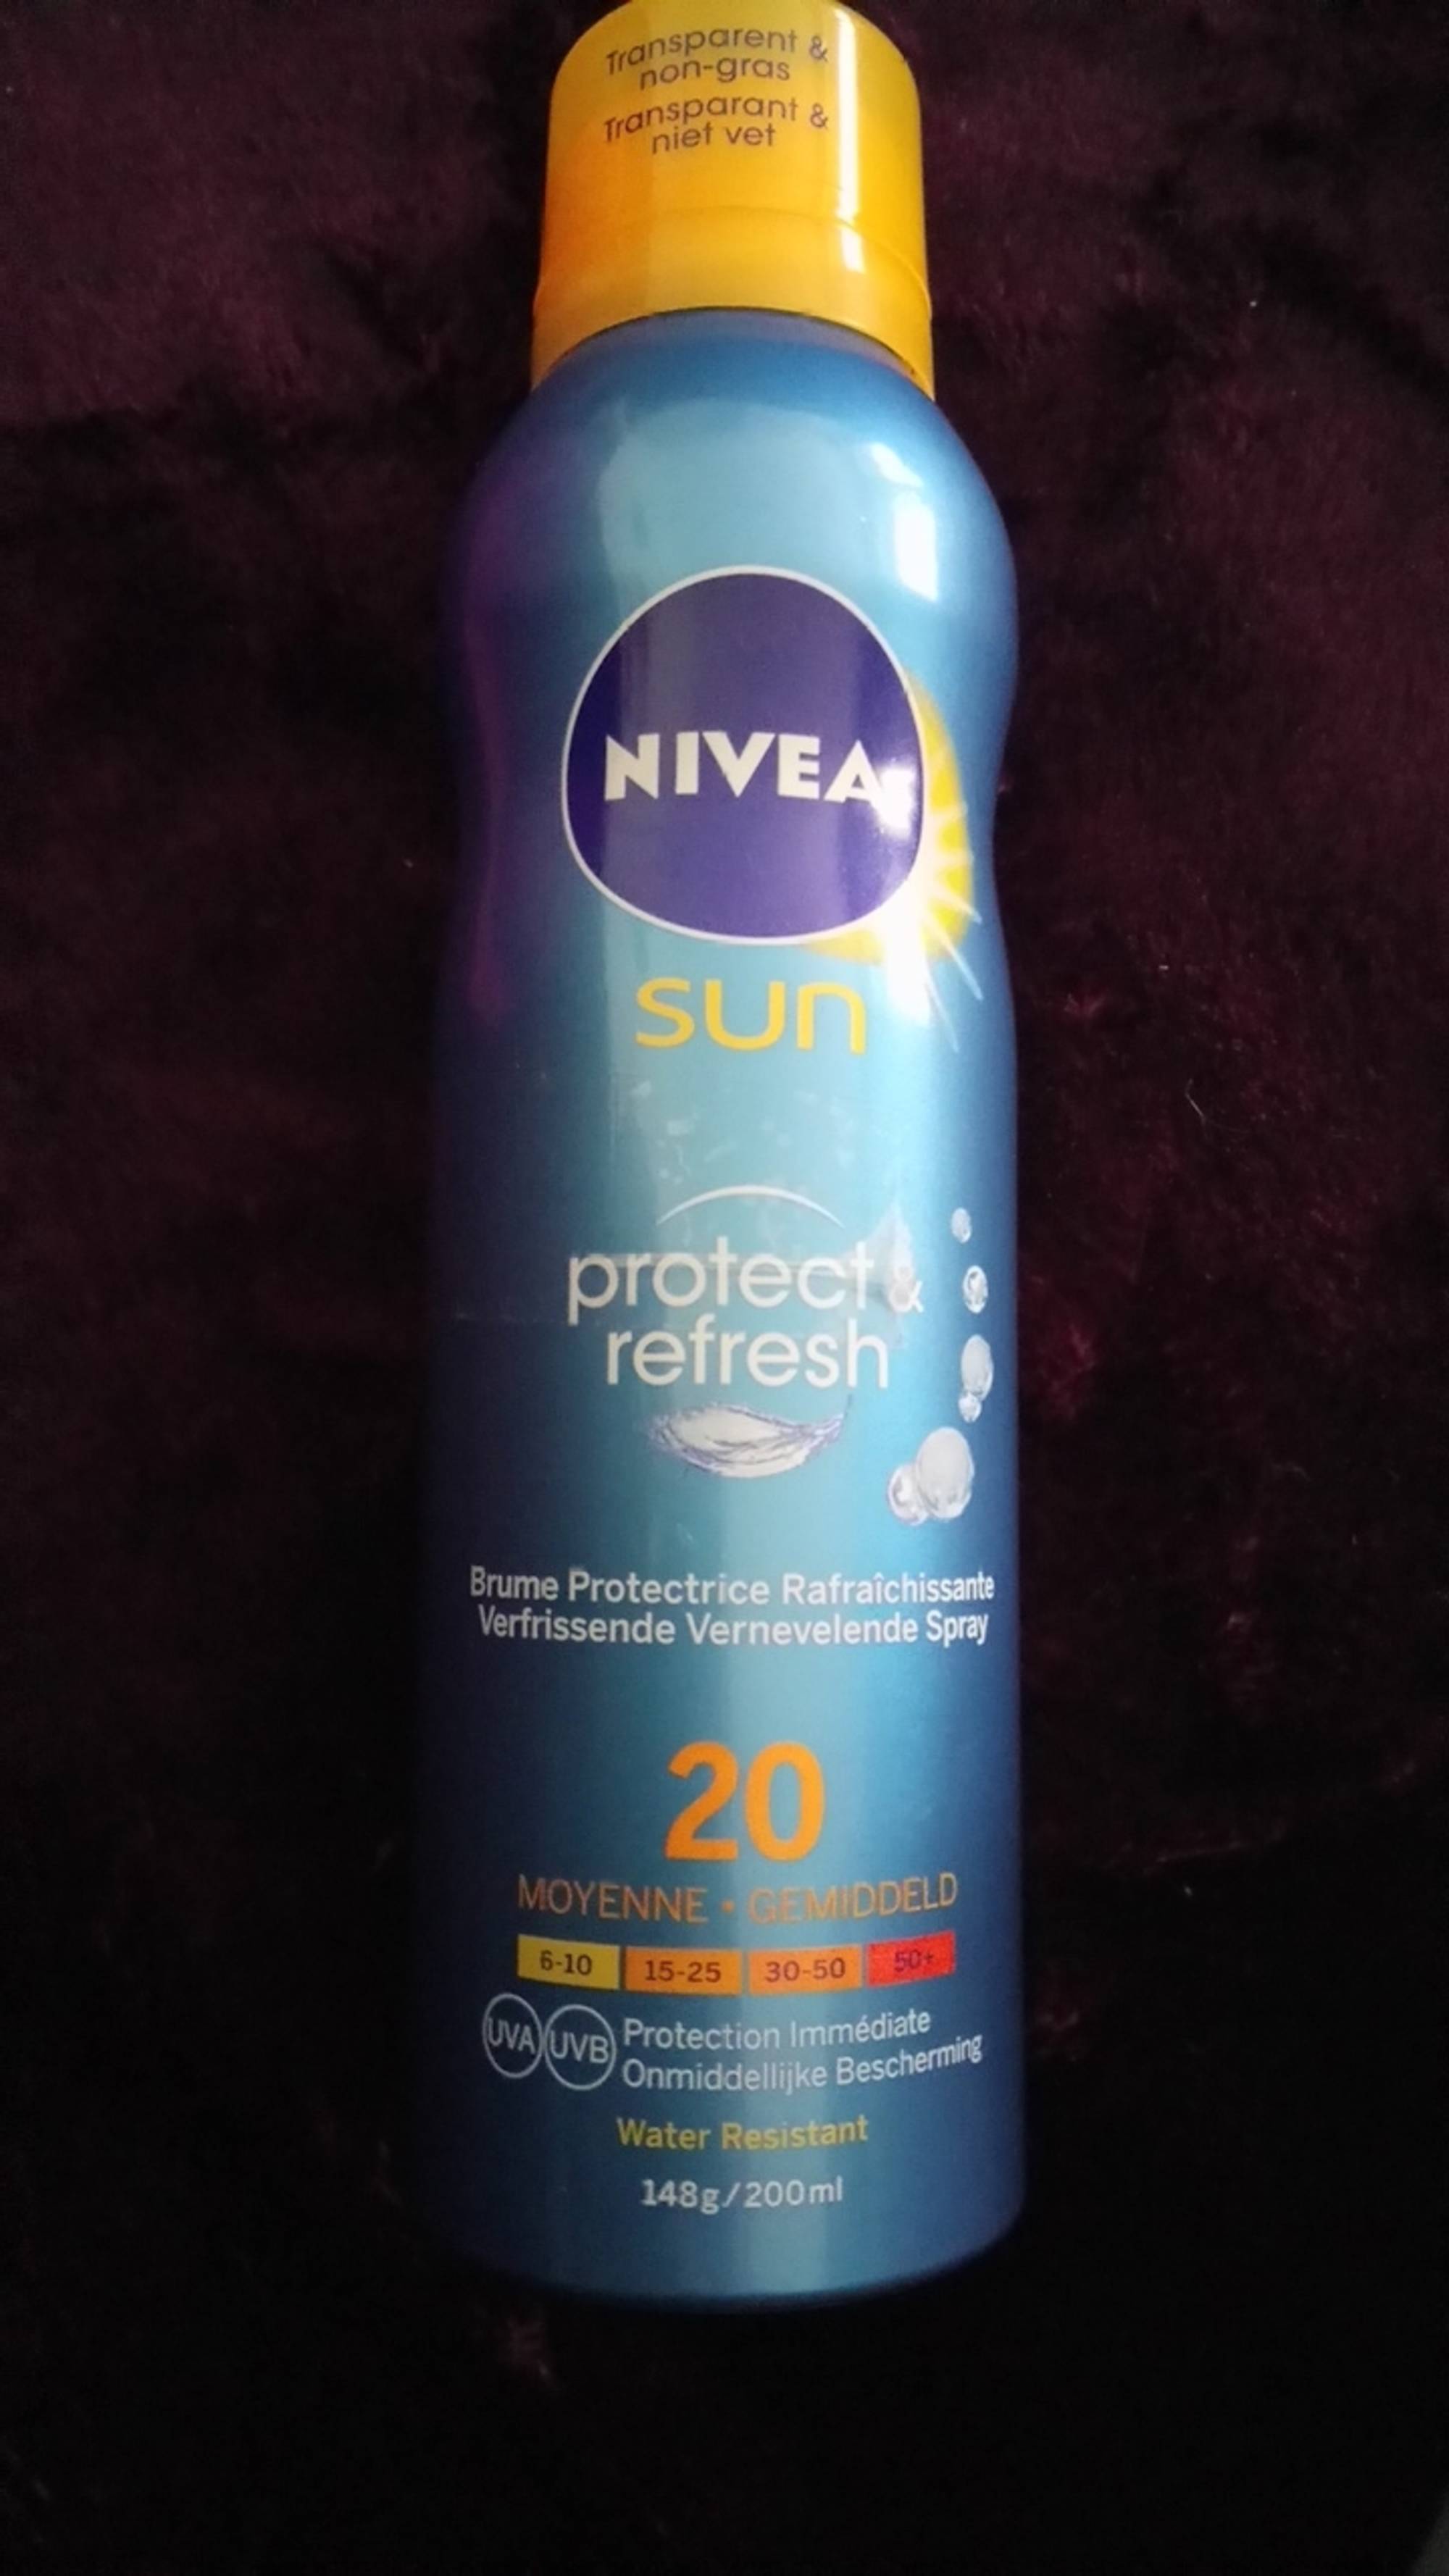 NIVEA - Sun Protect & Refresh - Brume protectrice rafraîchissante